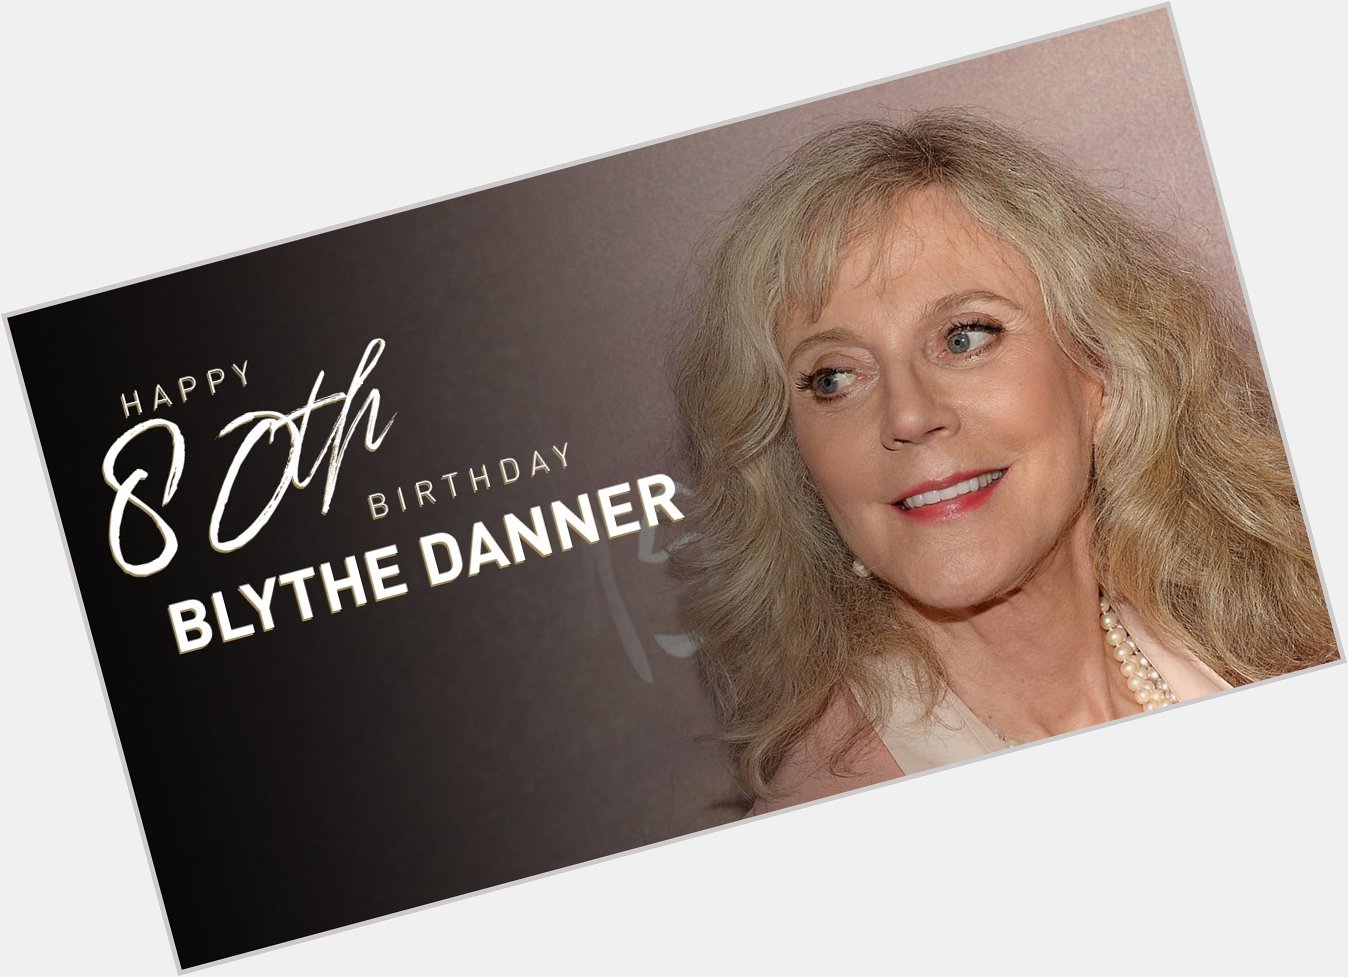 Happy 80th birthday Blythe Danner!

Read her bio here:  